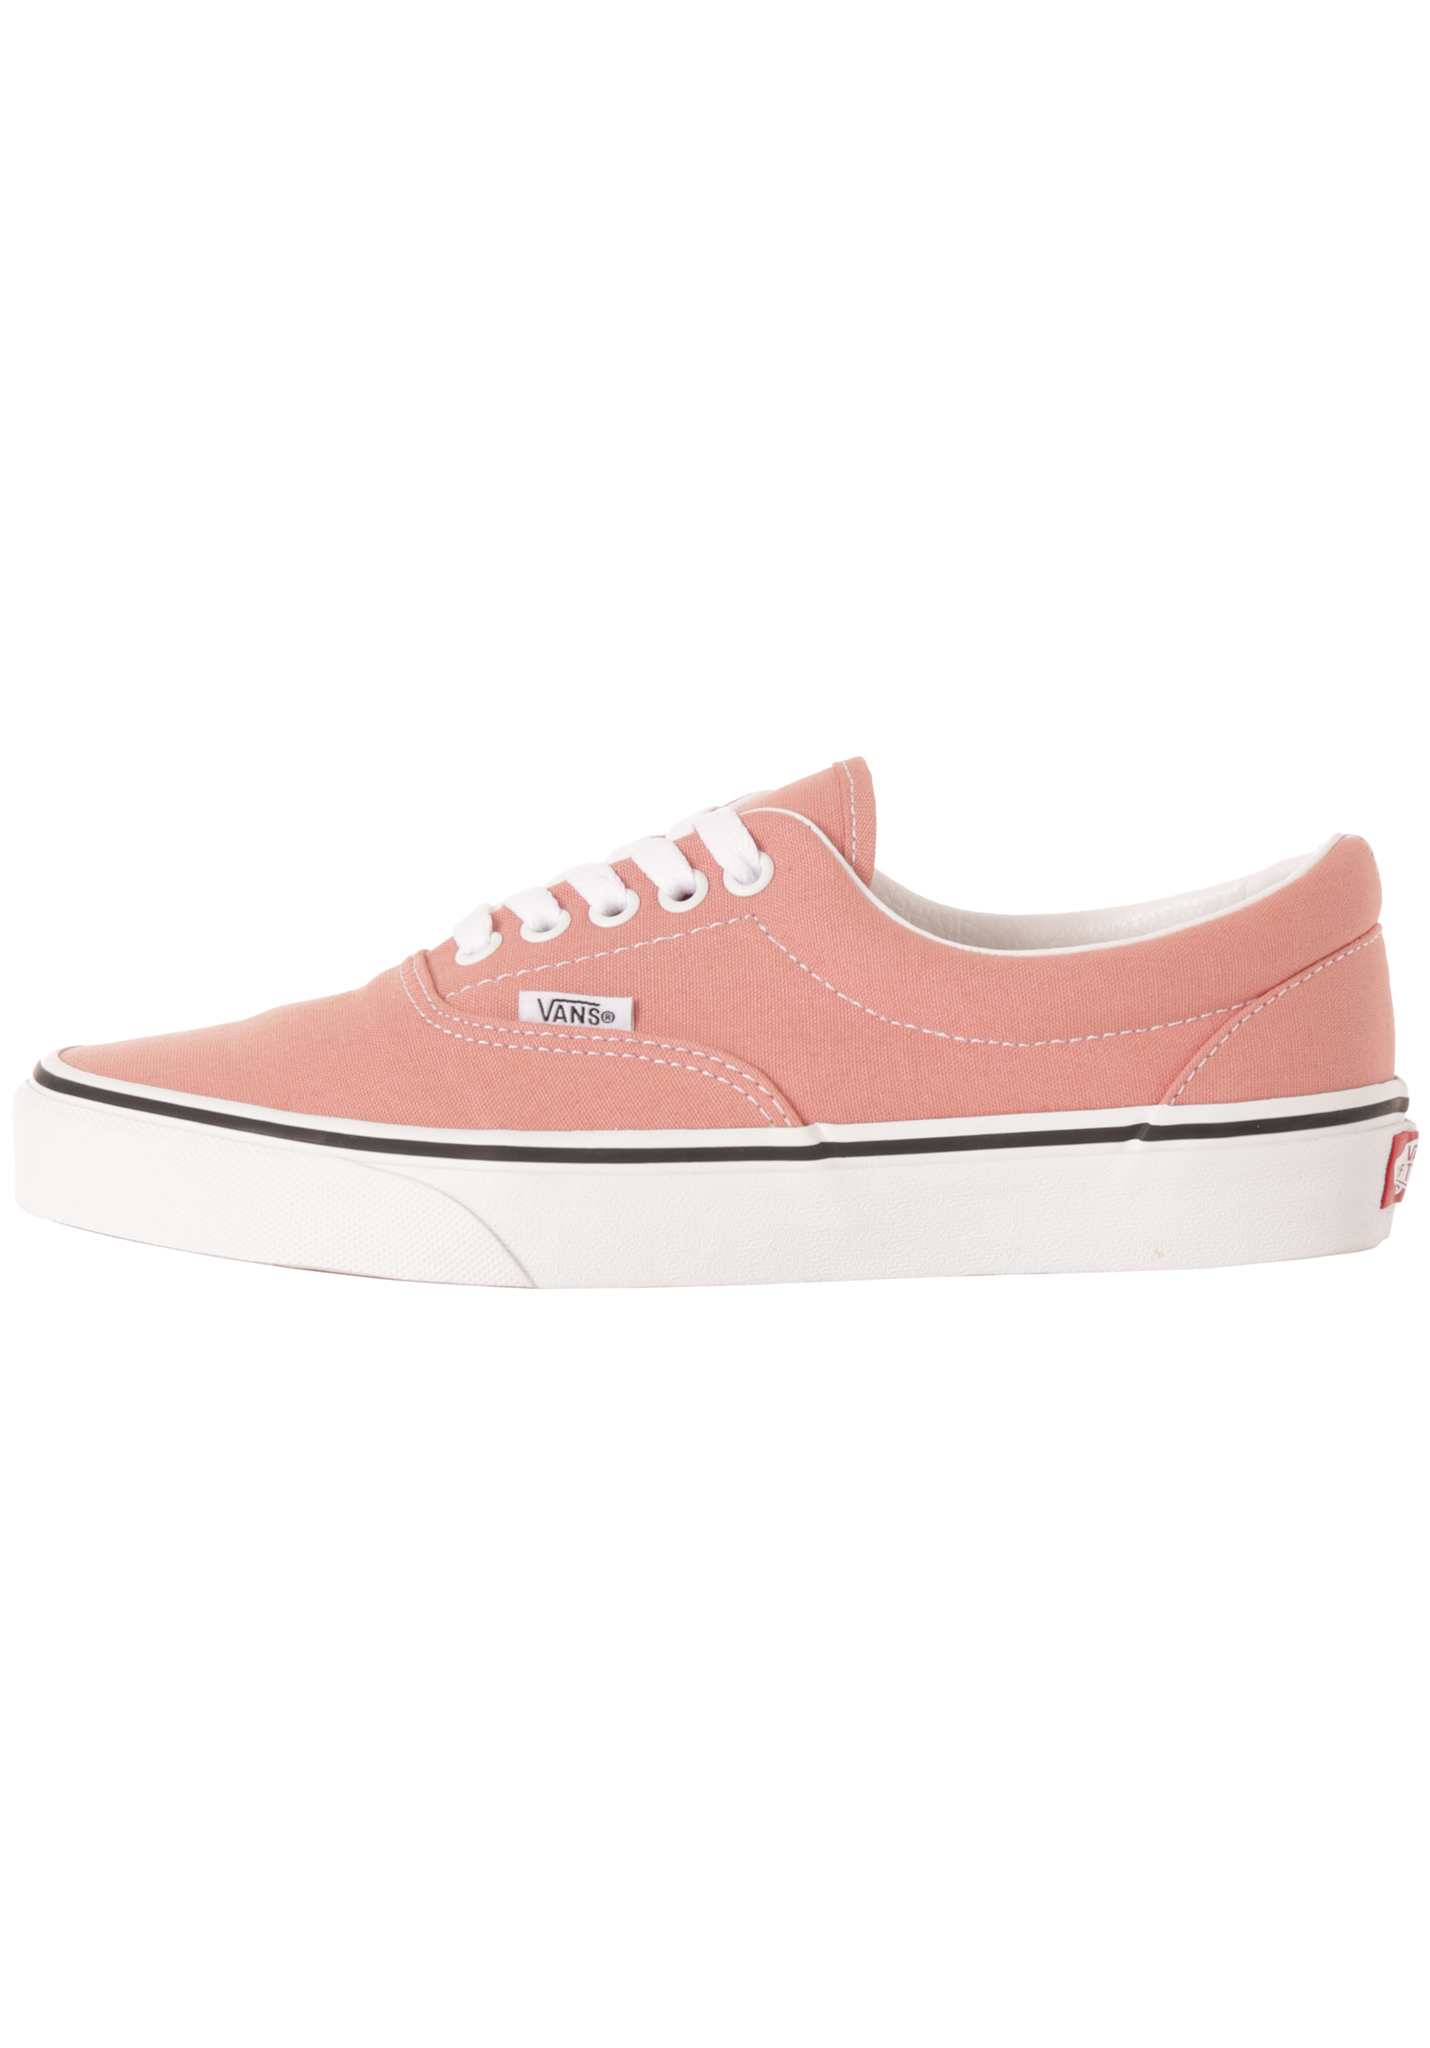 Vans Era Skateschuhe white - pink 38